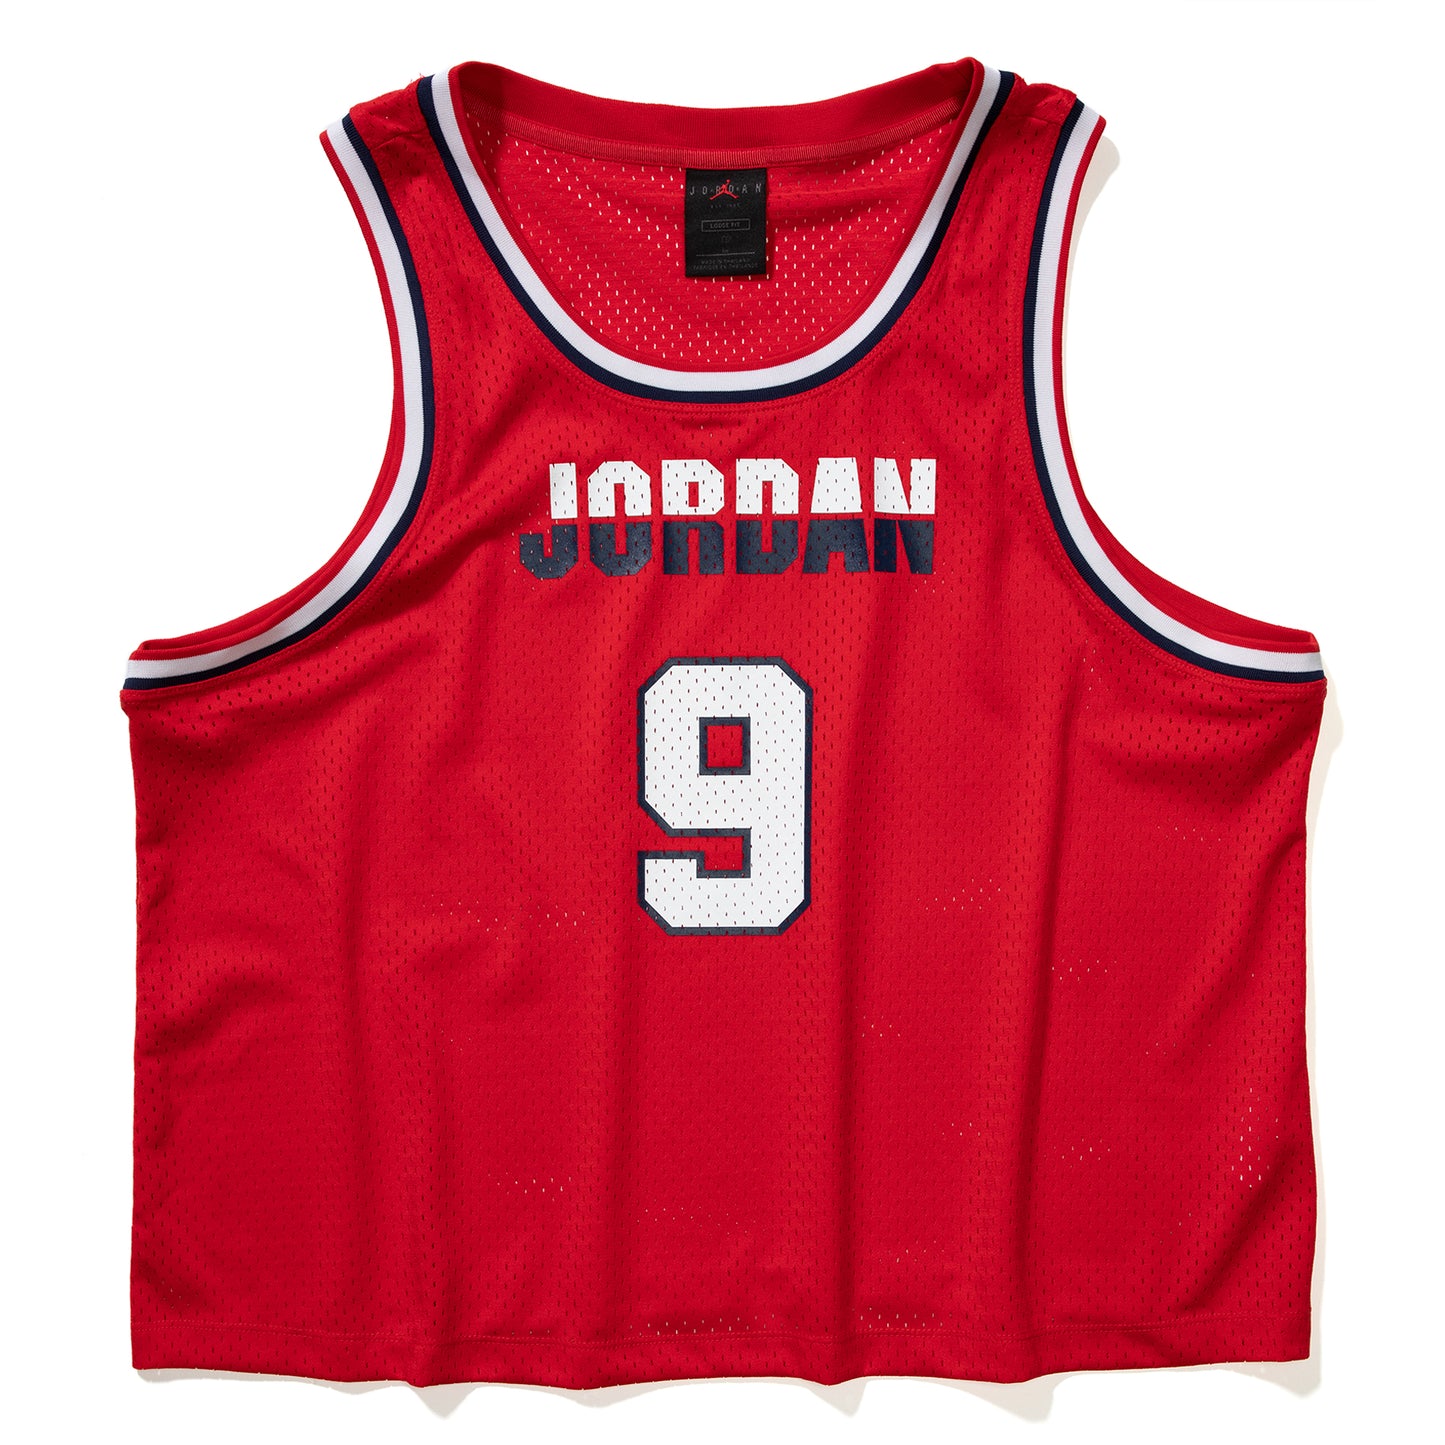 Nike Womens Jordan Plus Size Jersey Olympics (University Red)